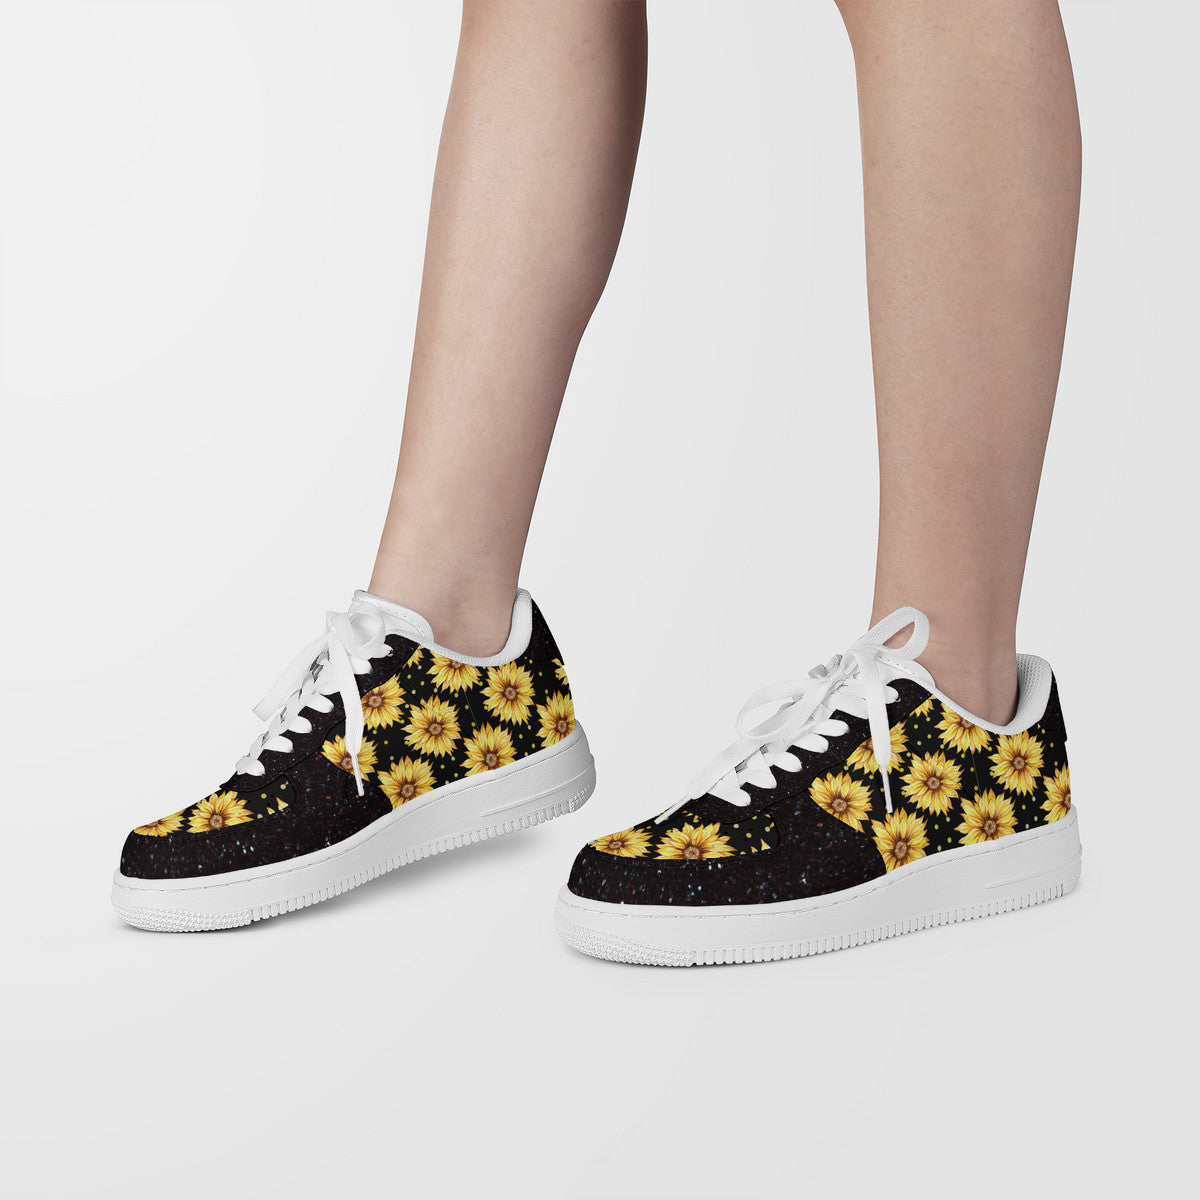 Sunflower Pattern | Custom Cool Shoes | Shoe Zero